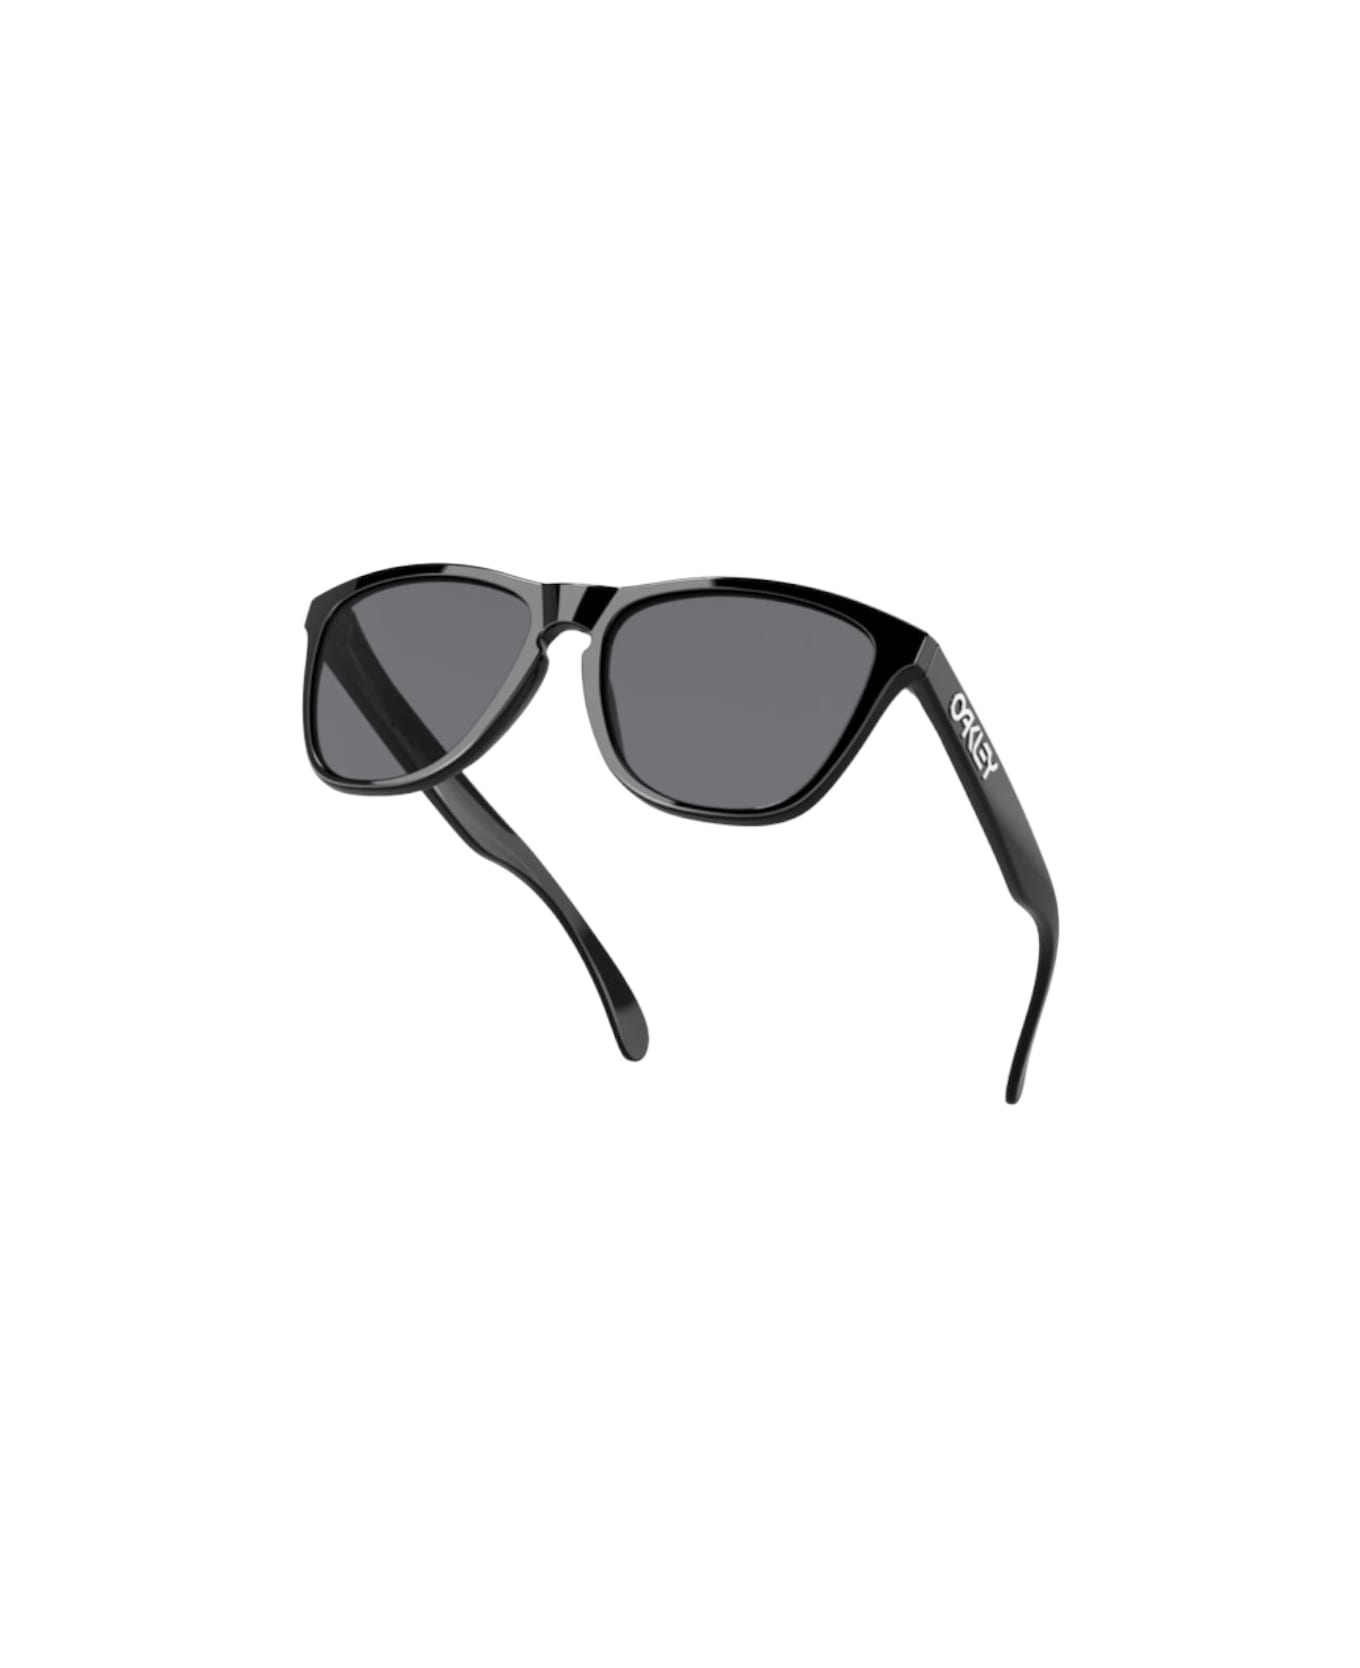 Oakley Frogskins - 9013 Sunglasses サングラス